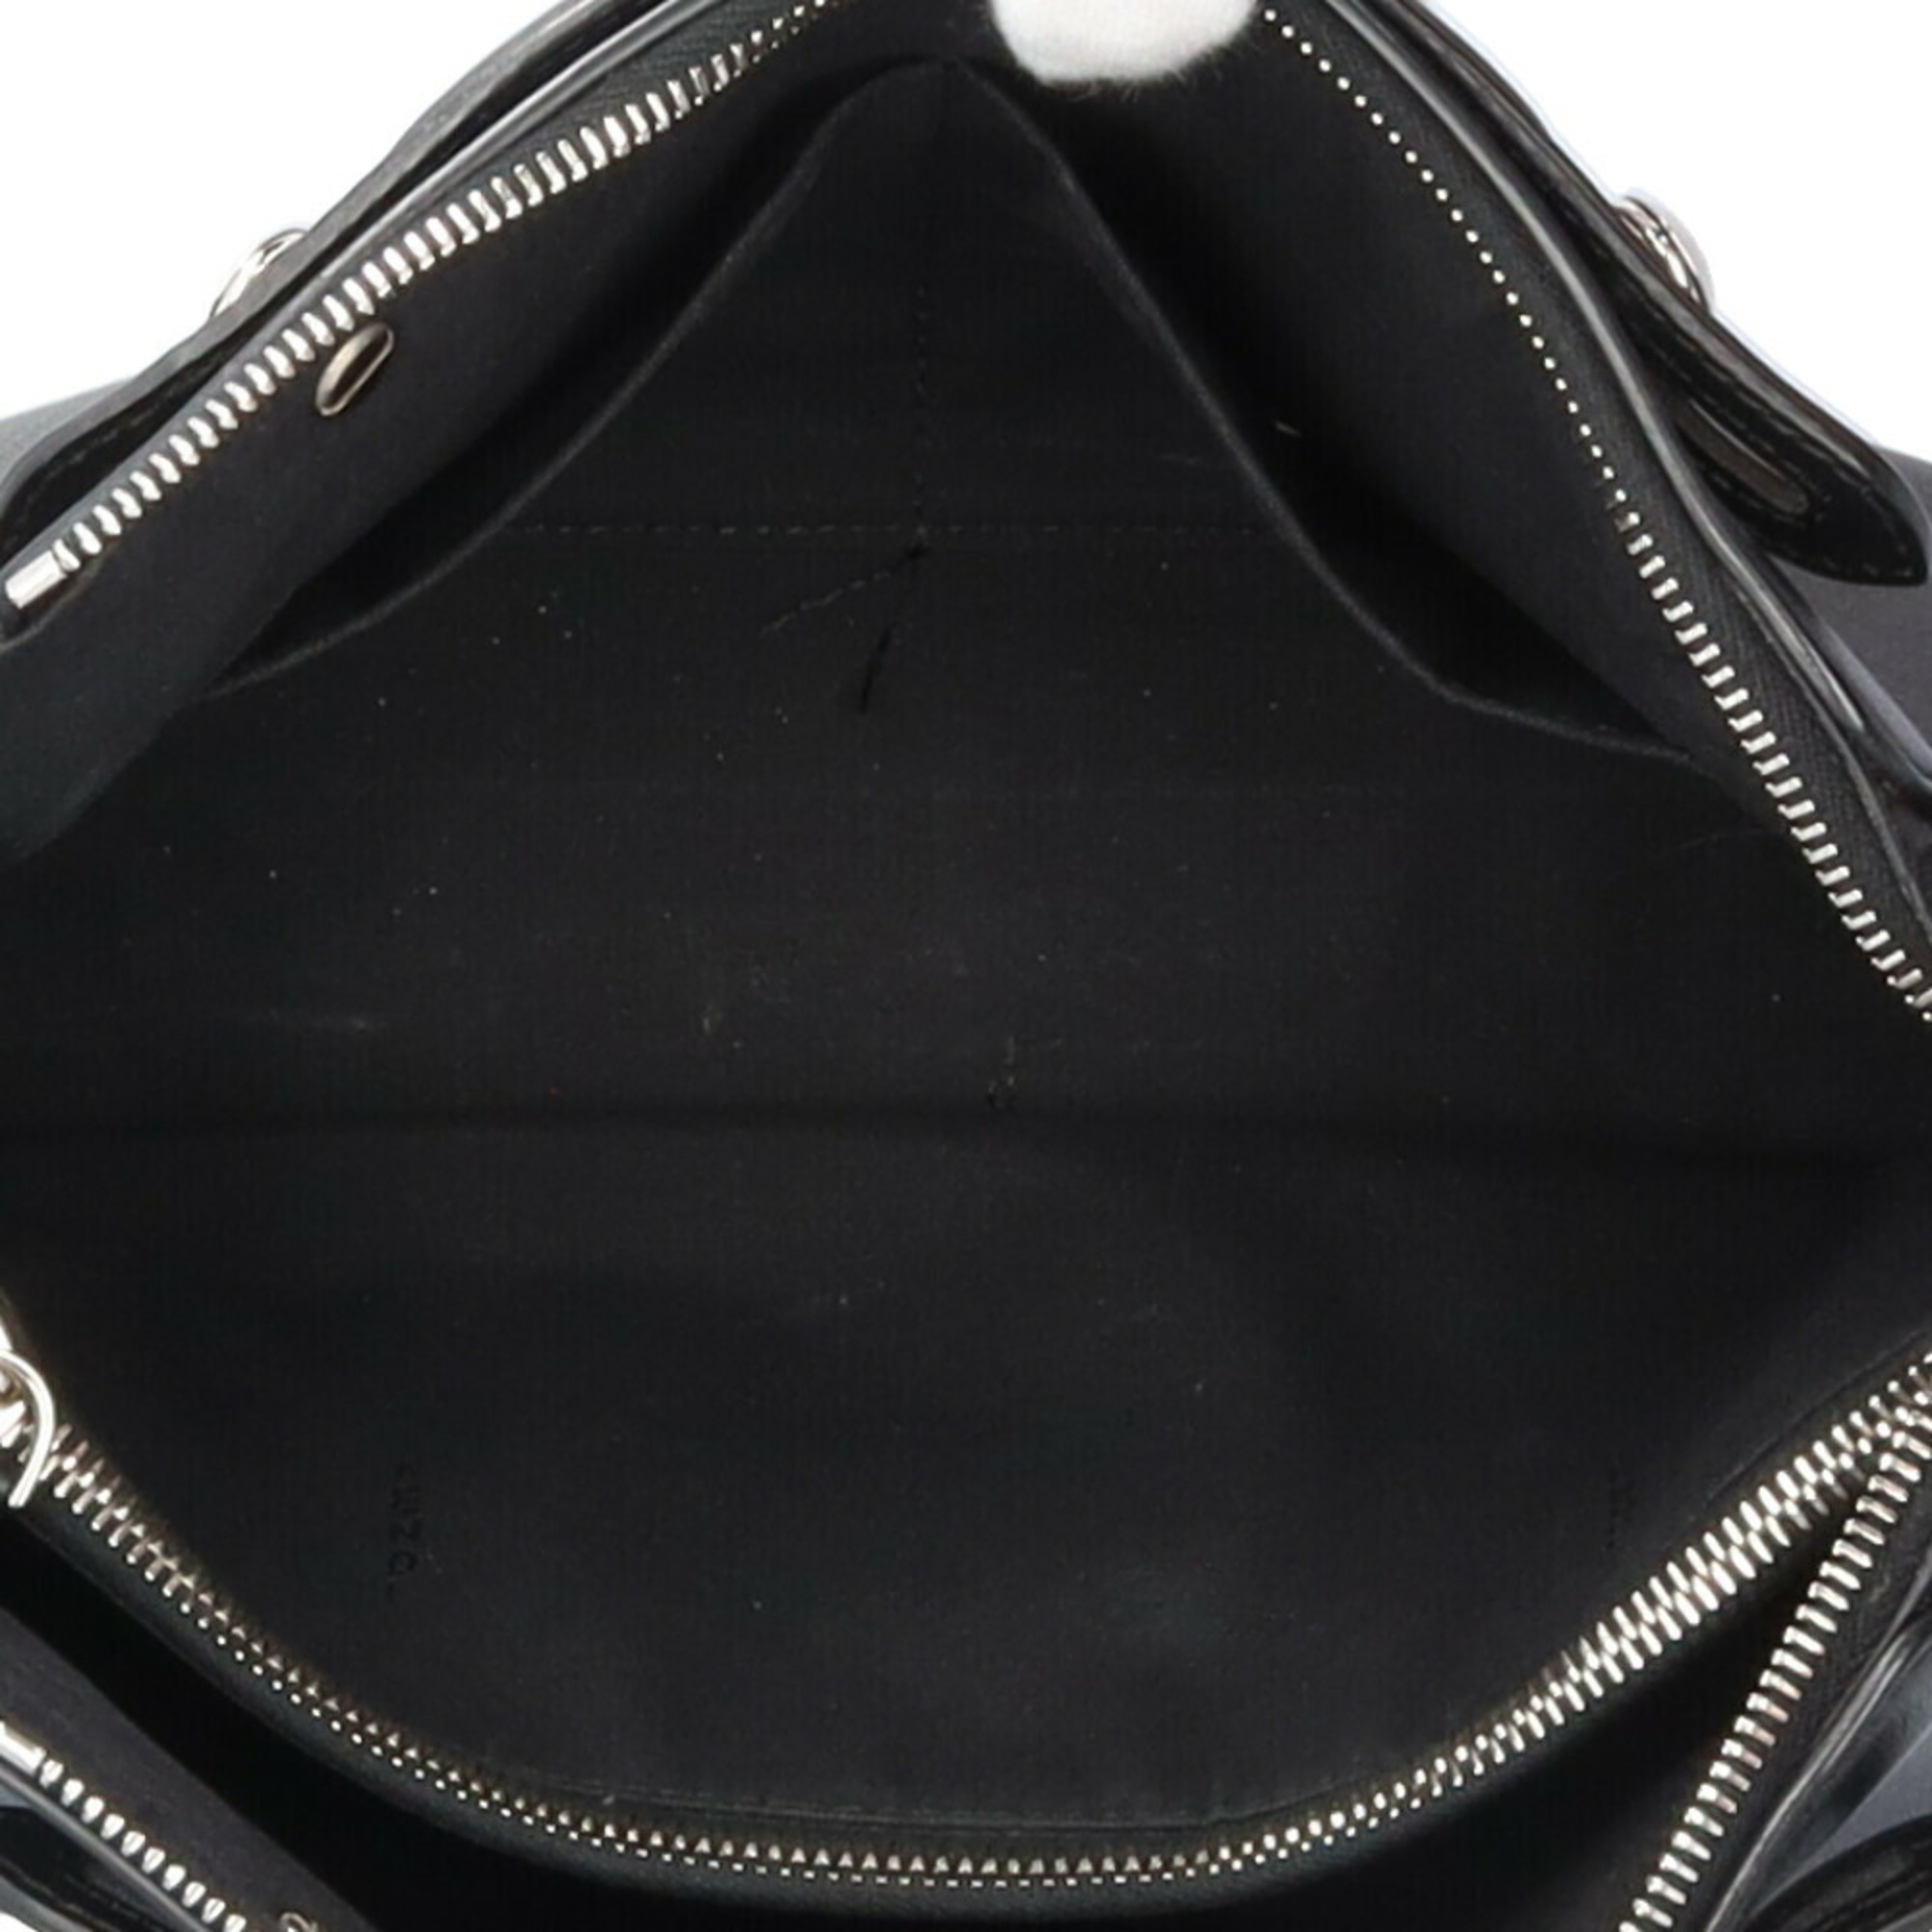 Fendi Visaway Medium Flower Shoulder Bag Leather 8BL124-9QX-169-0501 Black Women's FENDI 2way BRB10010000013185